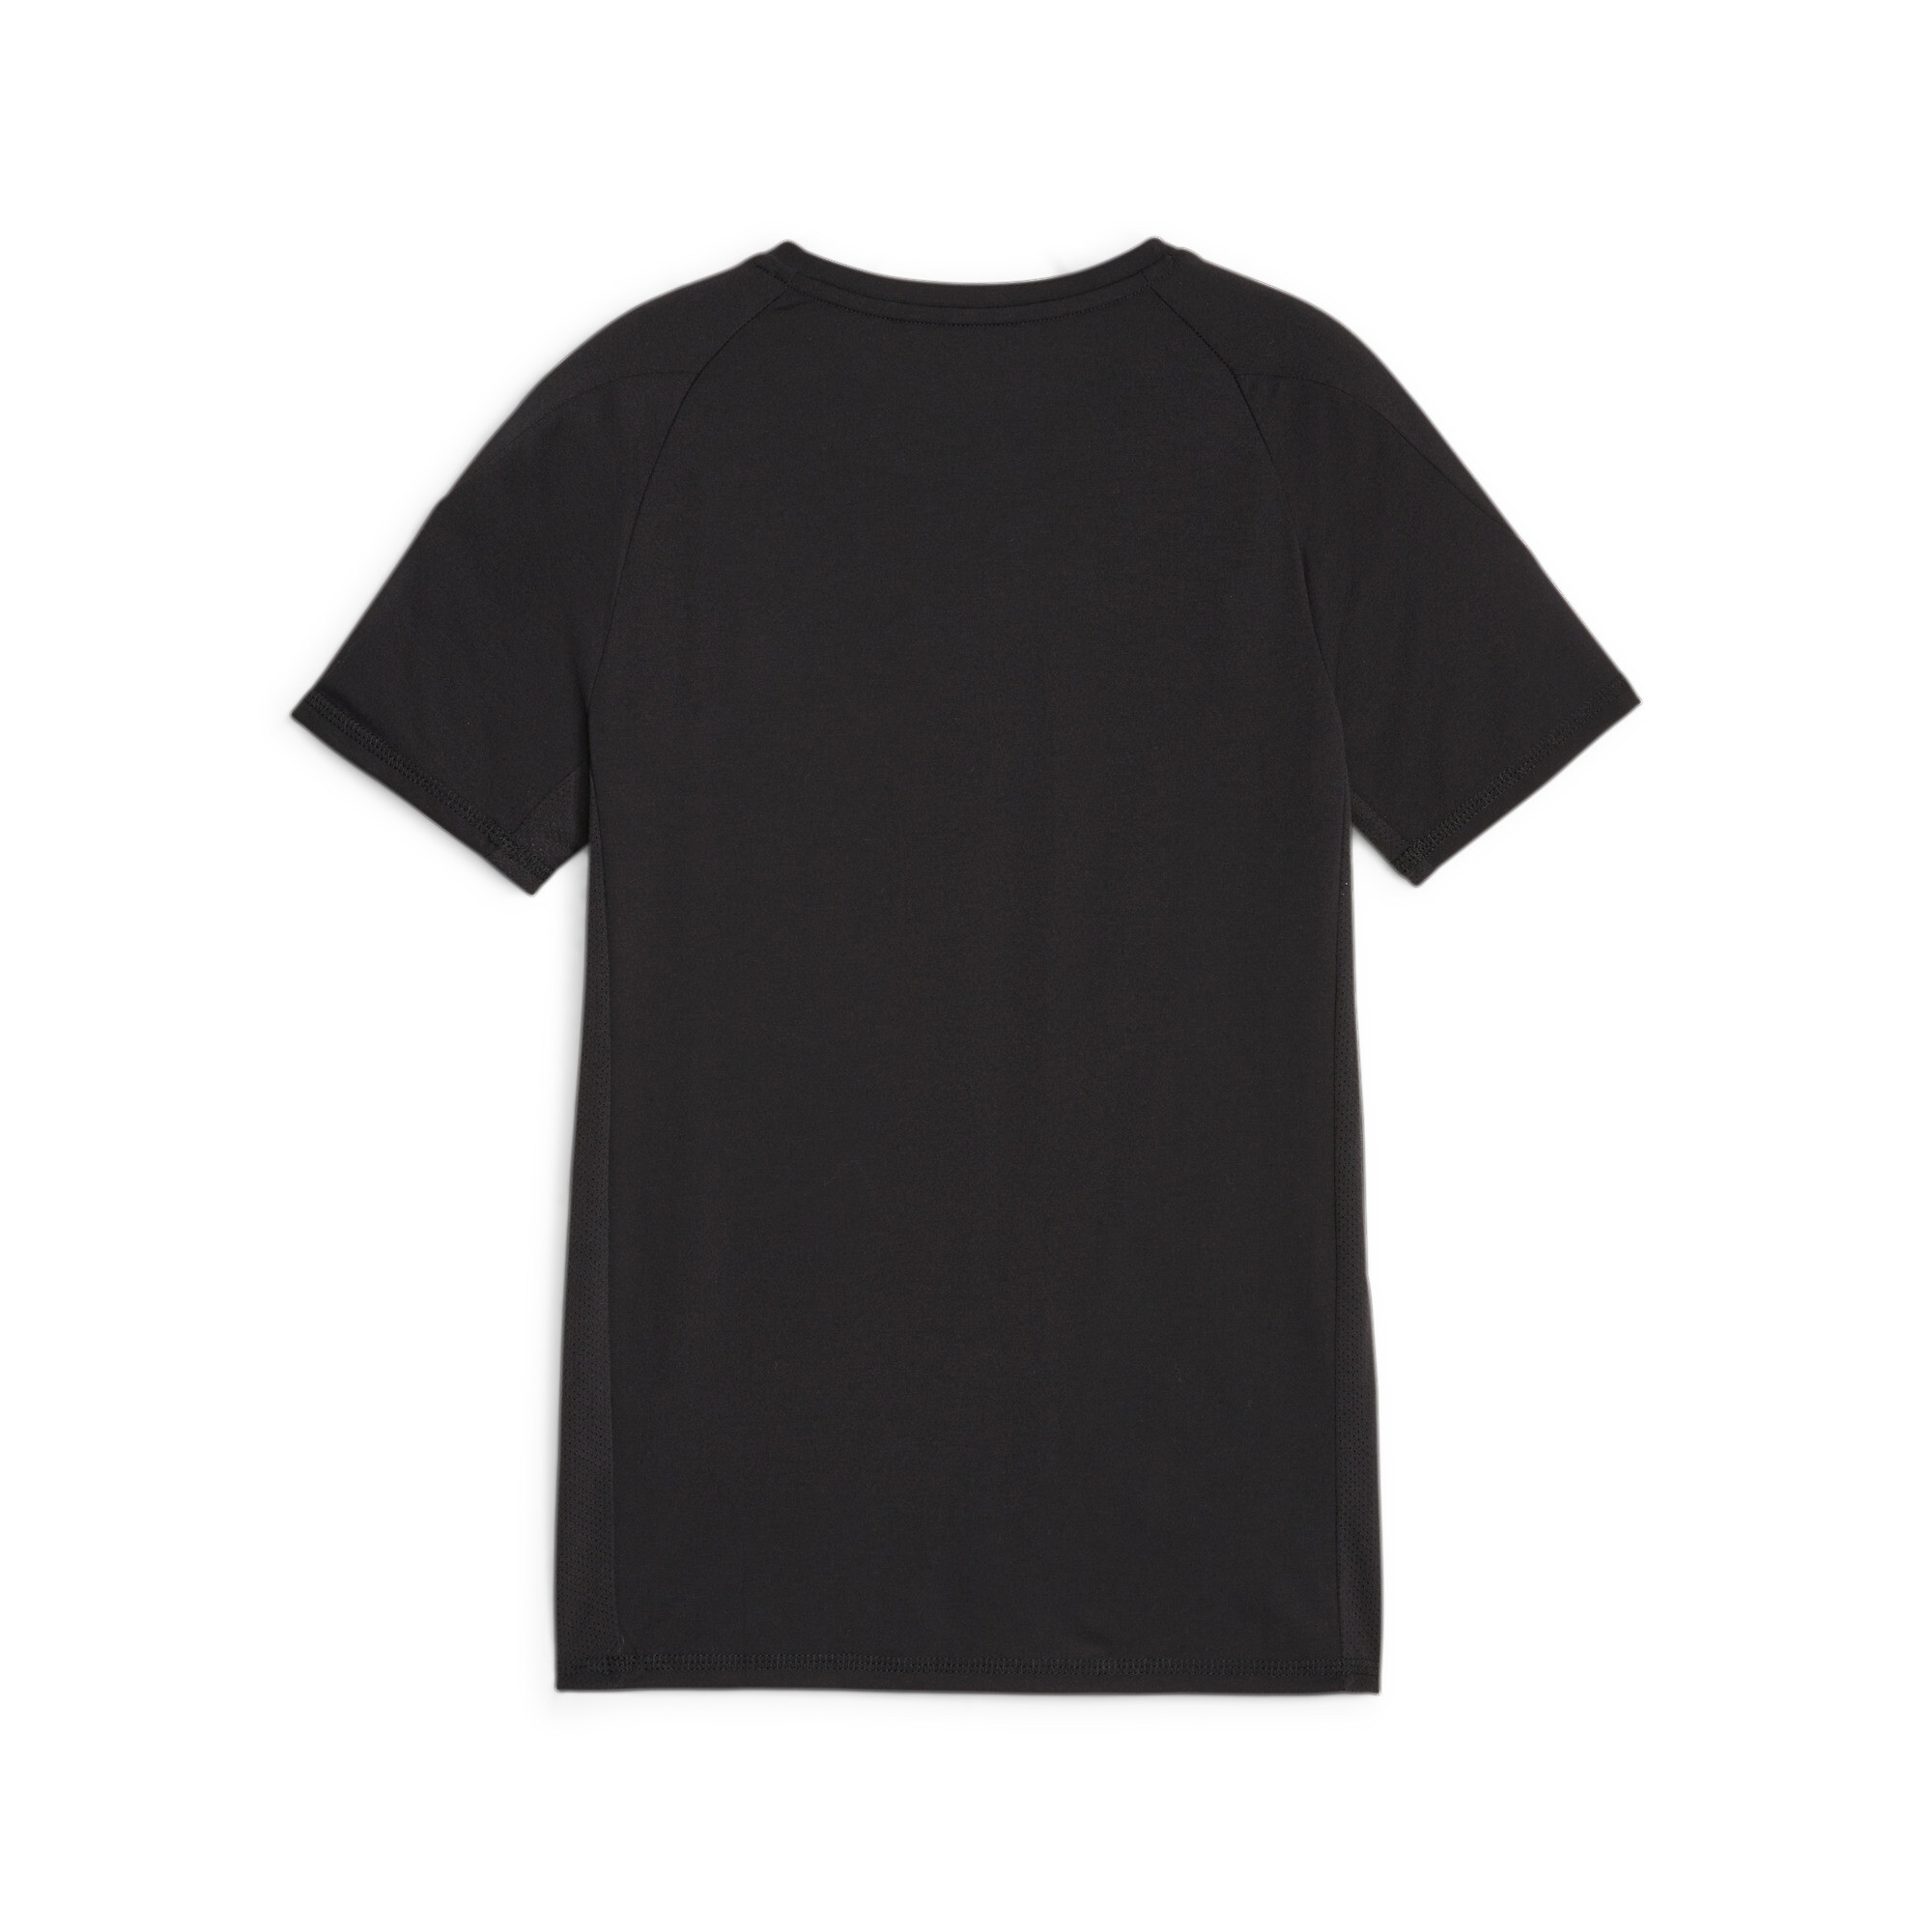 PUMA Evostripe T-Shirt In Black, Size 7-8 Youth